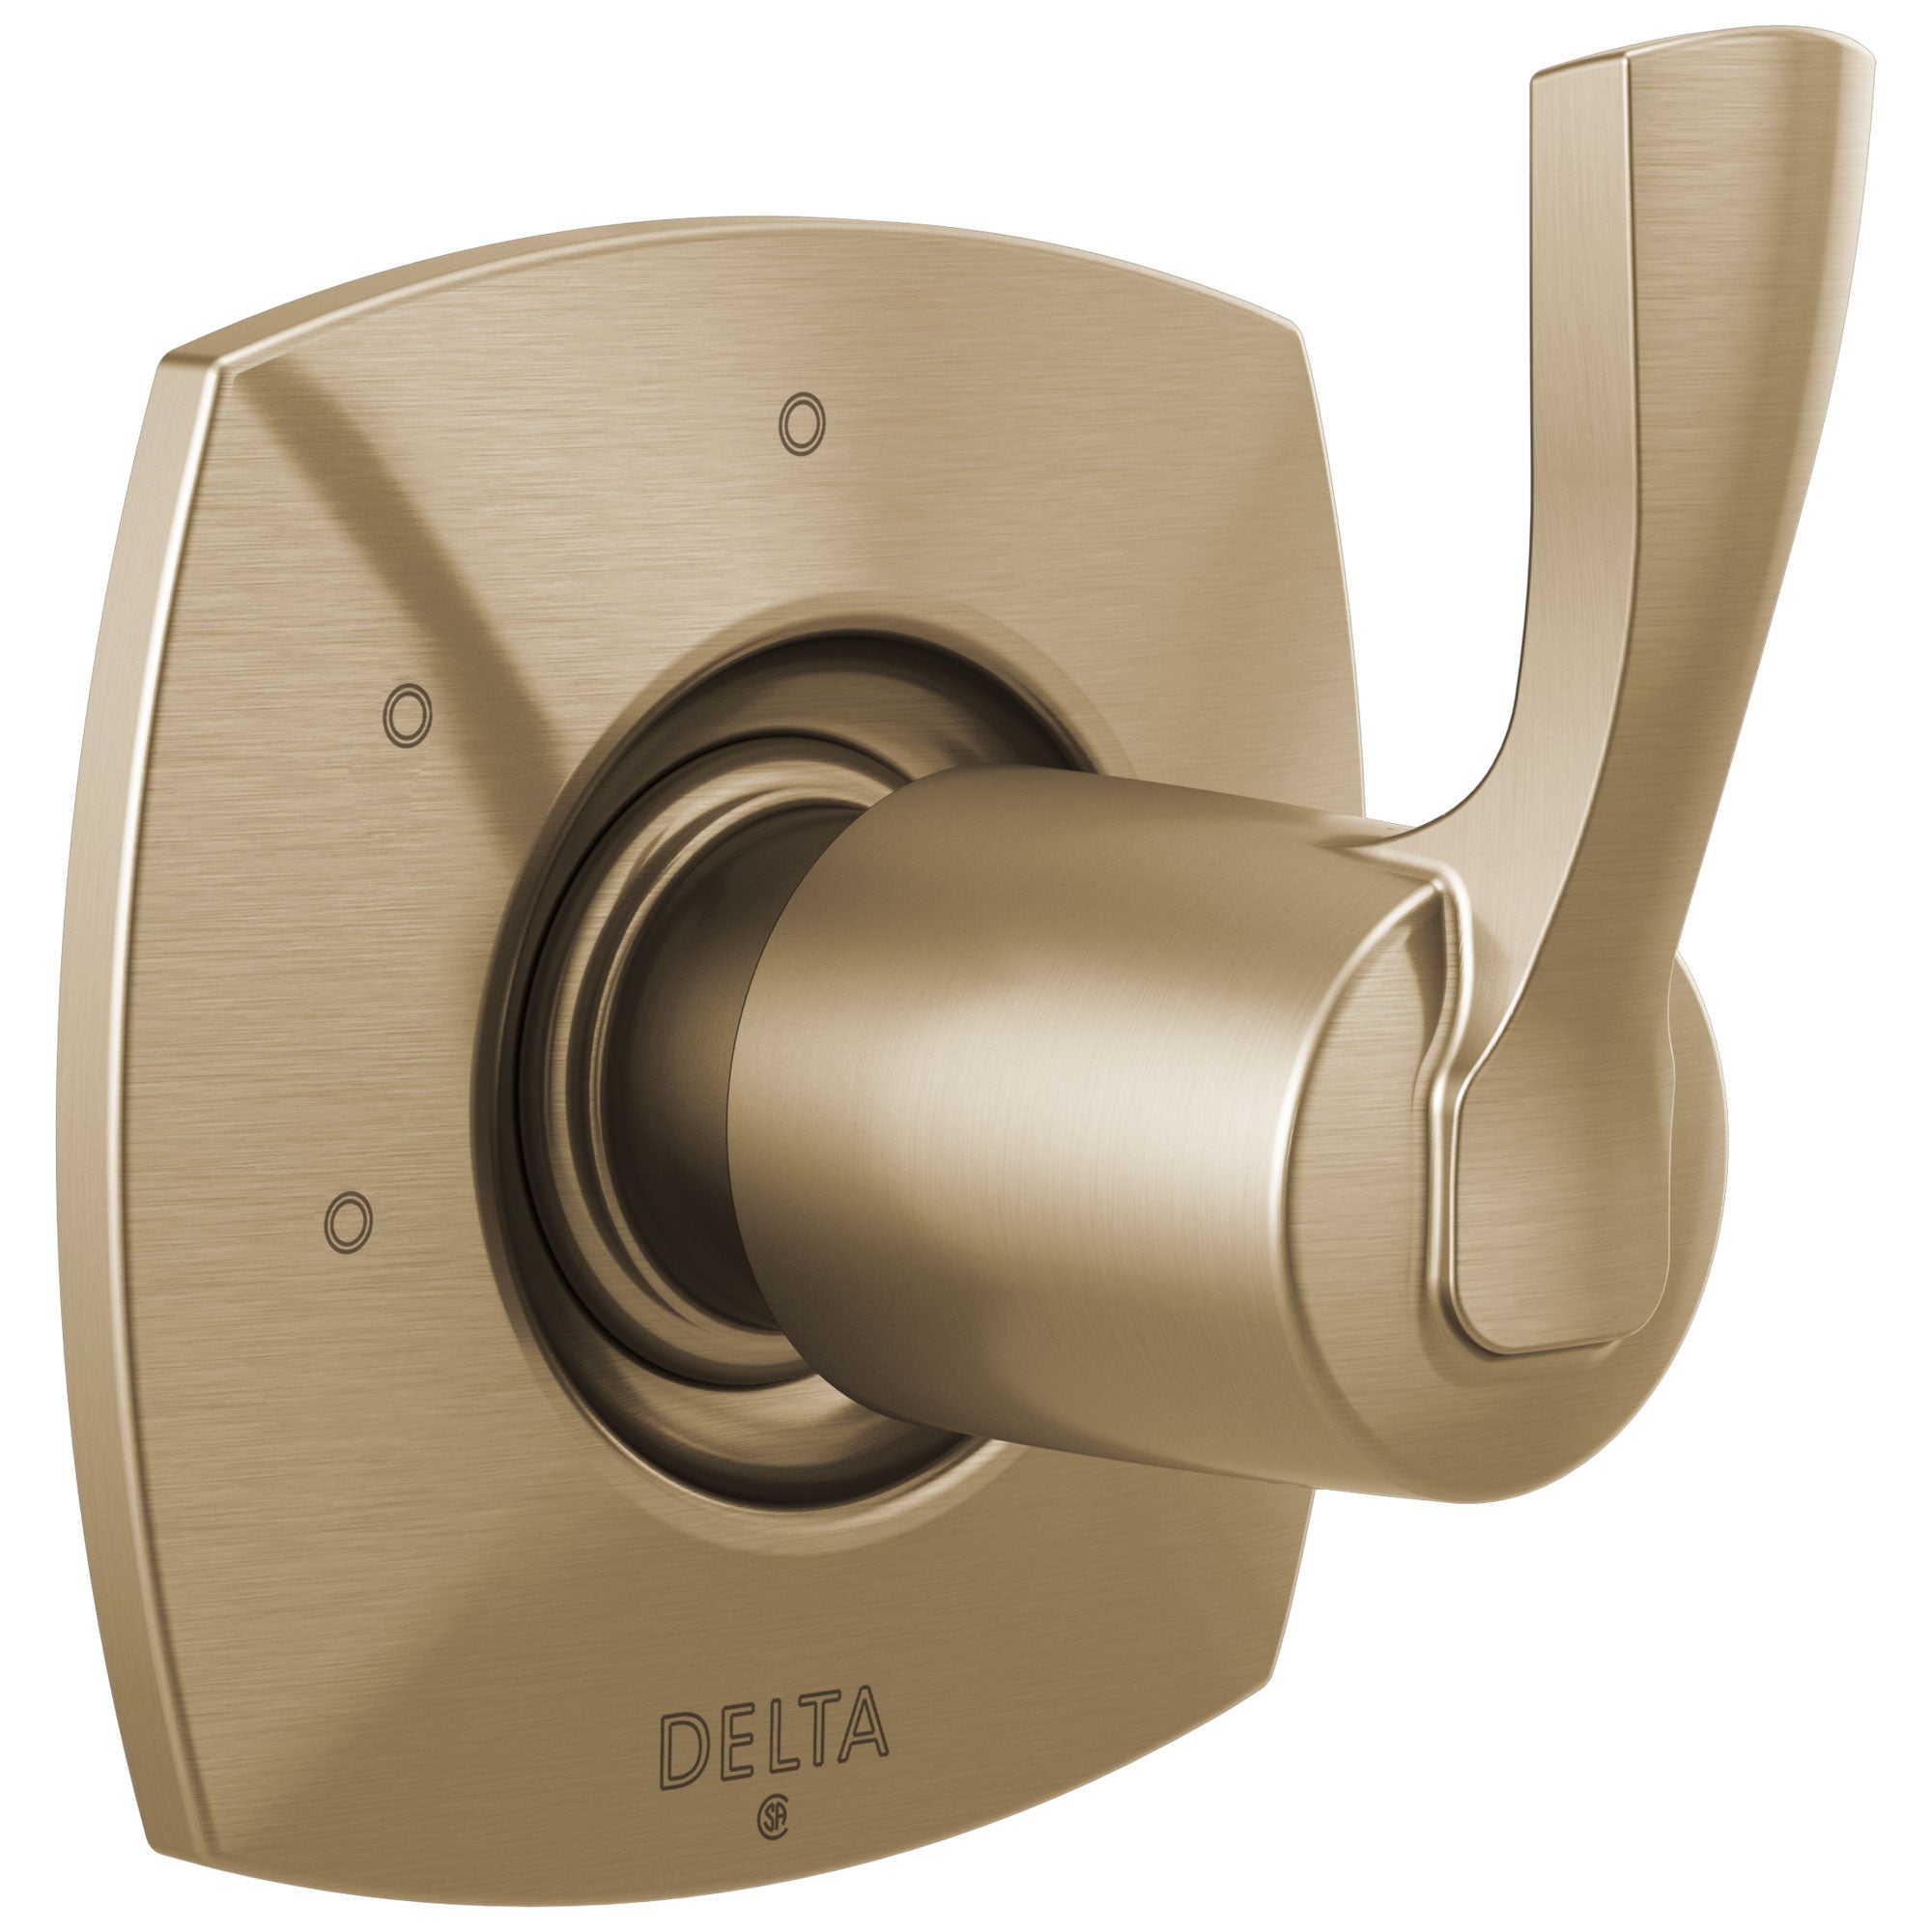 Delta Stryke Champagne Bronze Finish 3 Function 2 Outlet Port Shower System Diverter Includes Lever Handle and Rough-in Valve D3575V